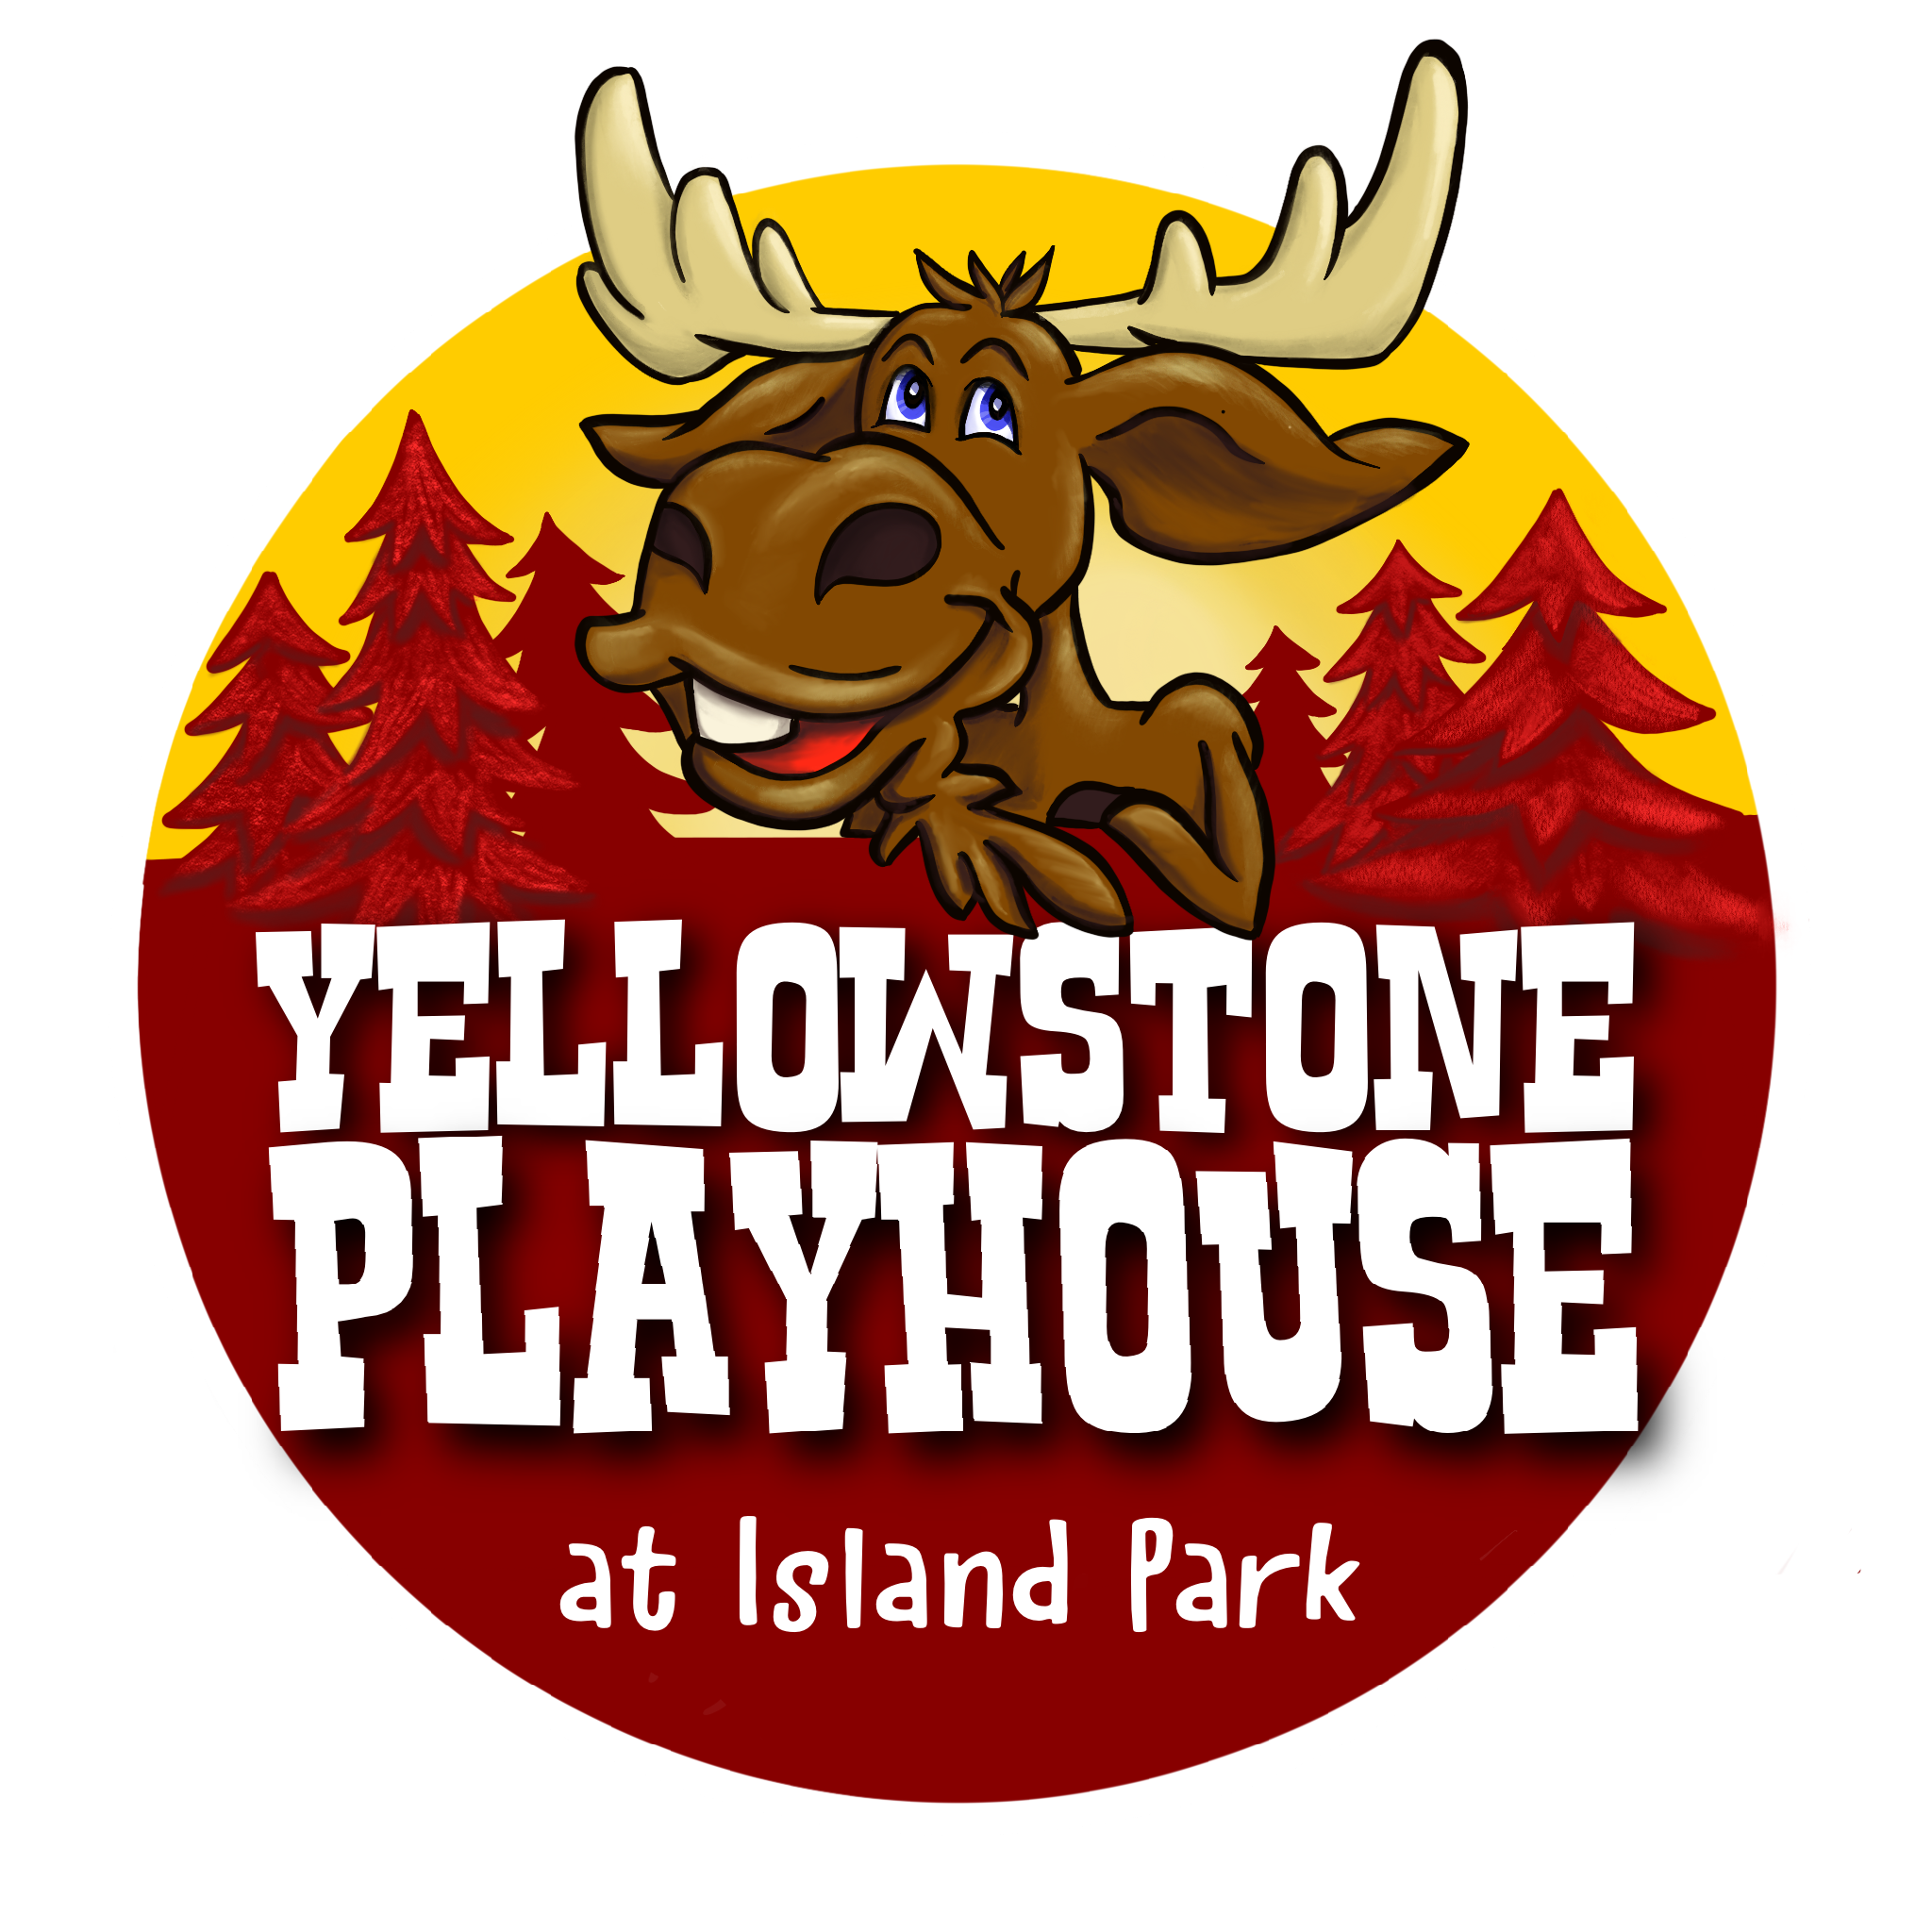 Yellowstone Playhouse